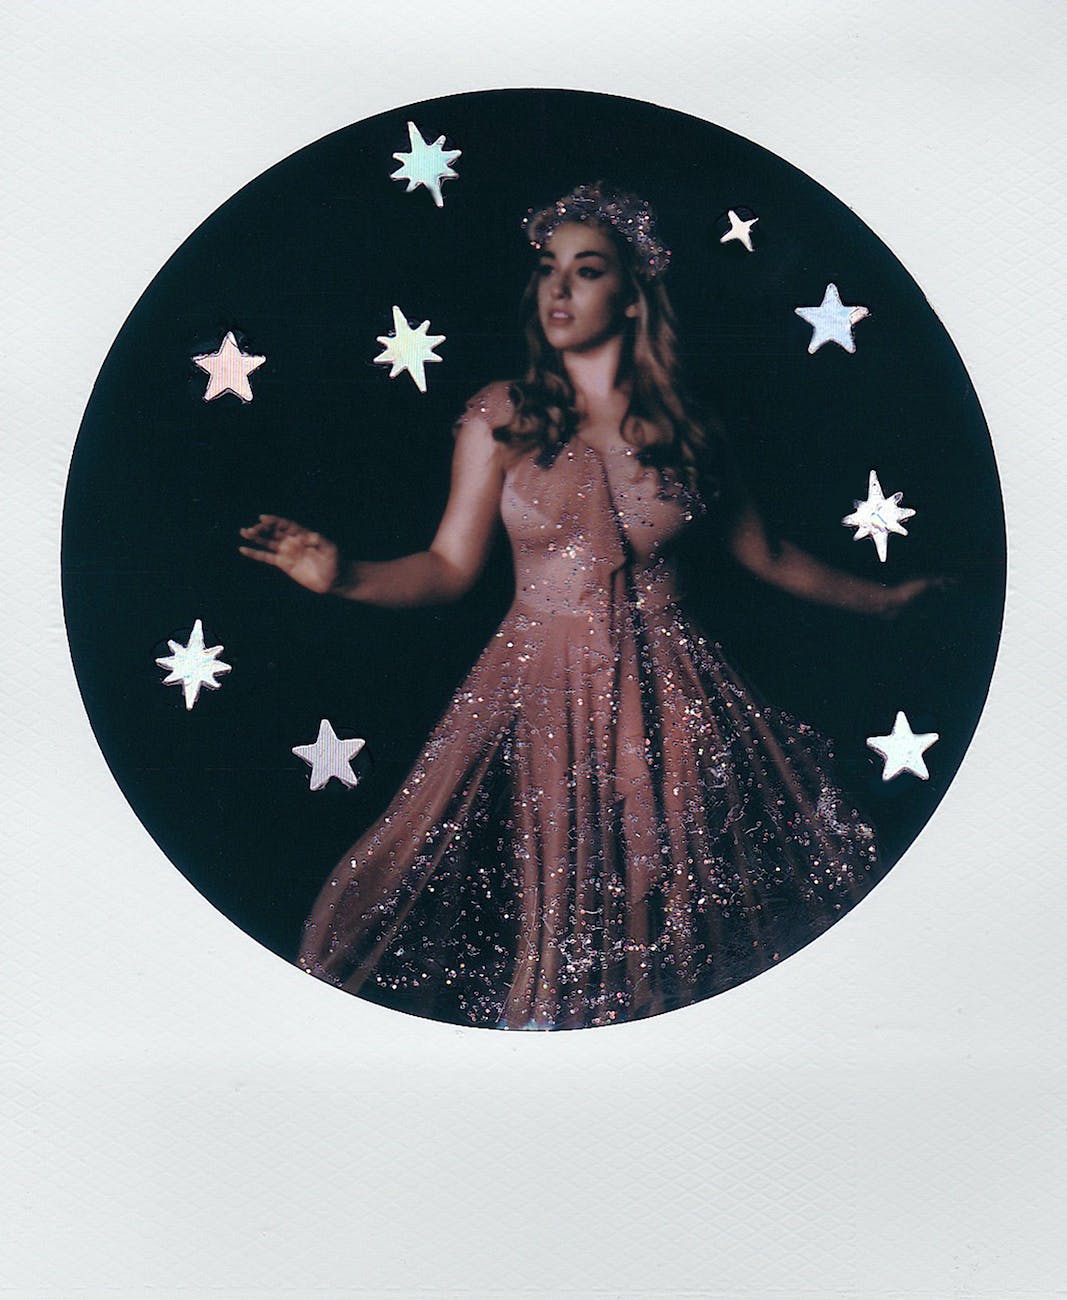 stars around woman in dress